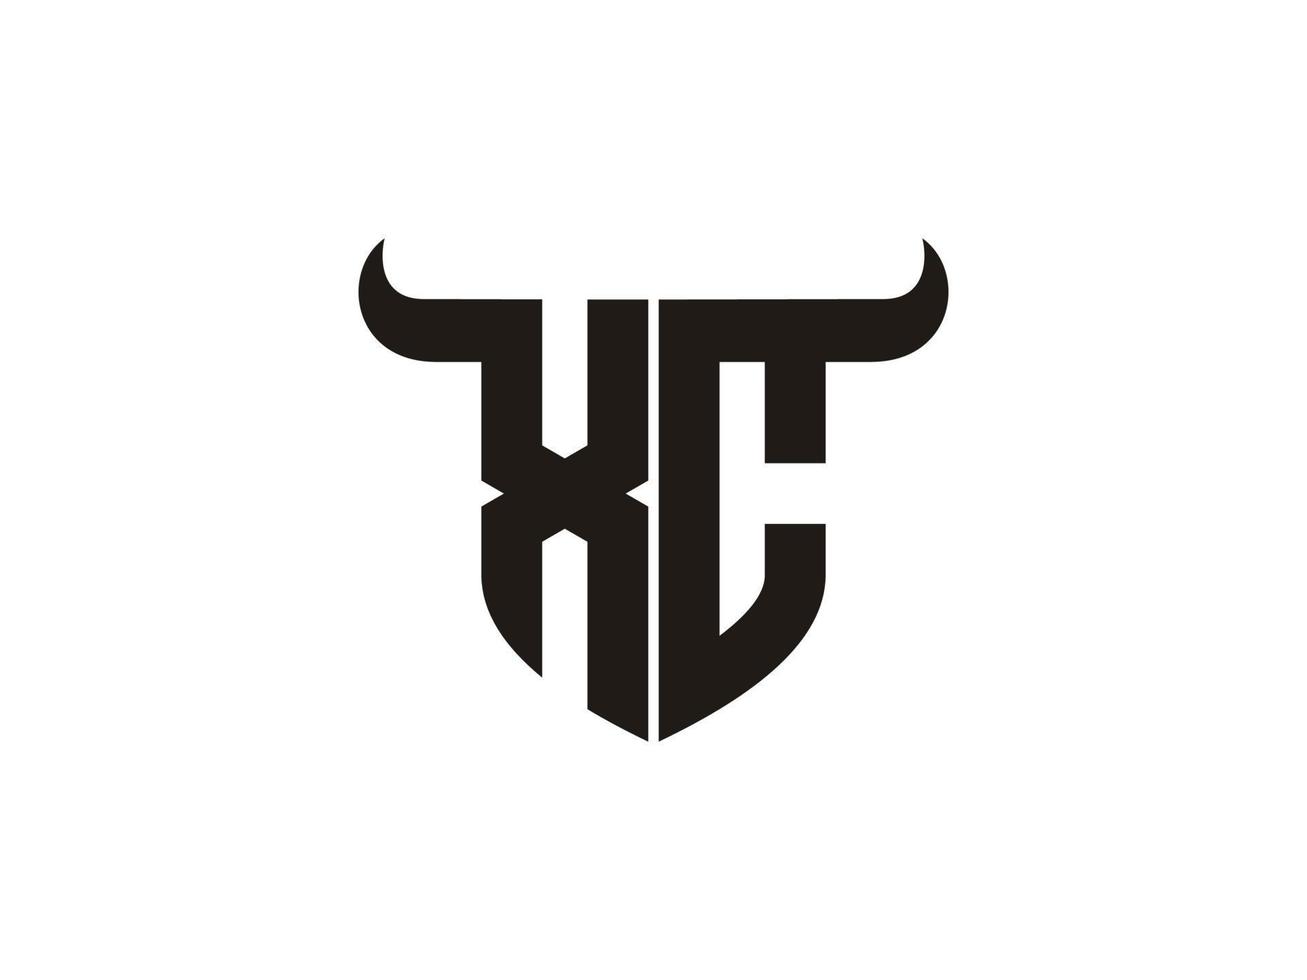 diseño inicial del logo del toro xc. vector